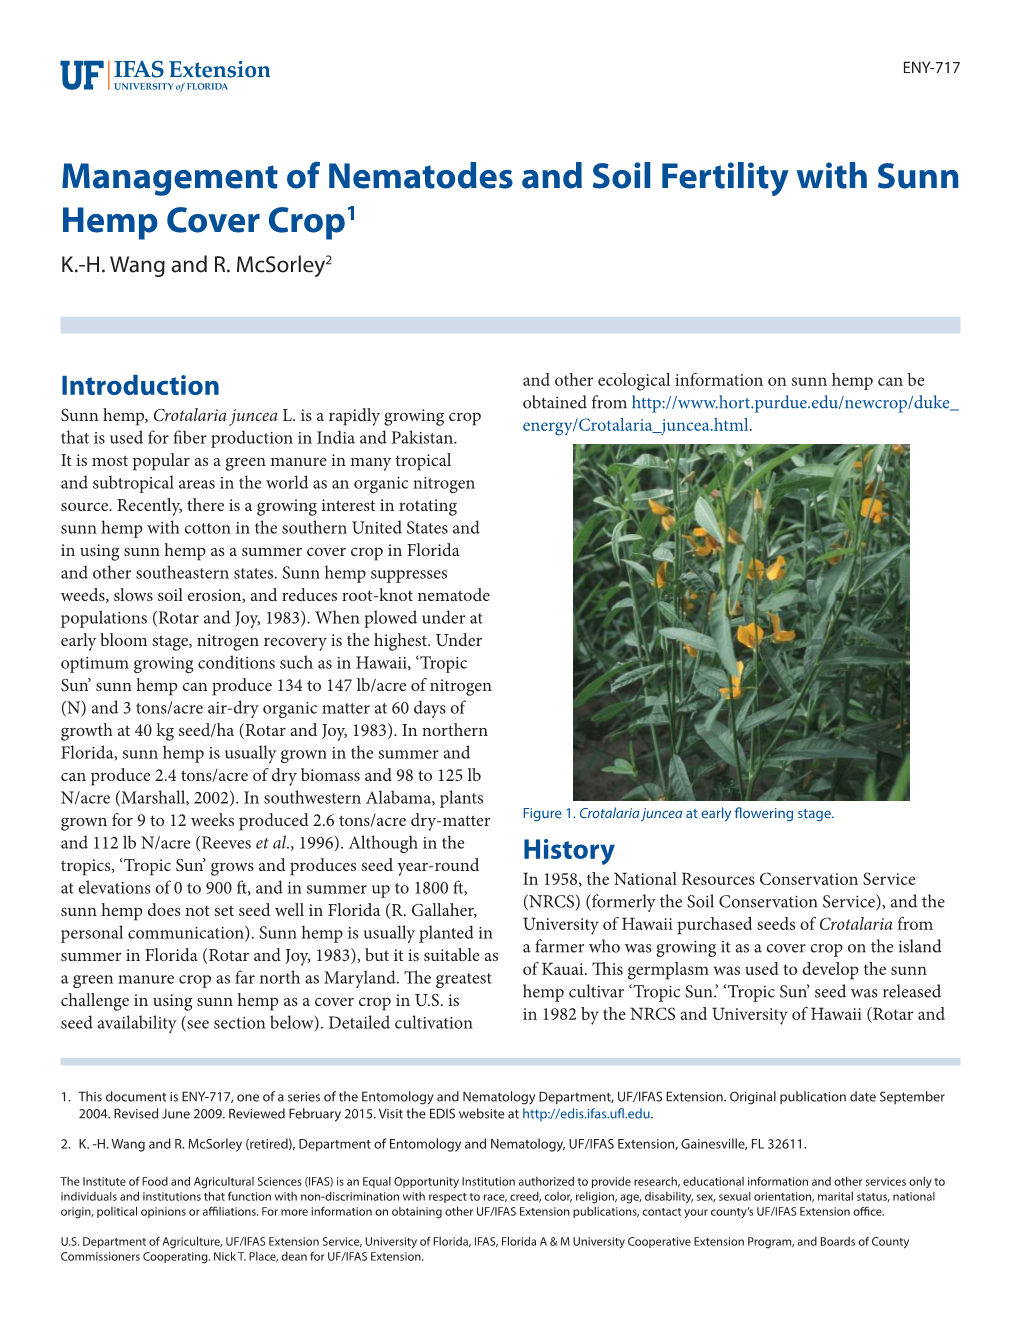 Management of Nematodes and Soil Fertility with Sunn Hemp Cover Crop1 K.-H